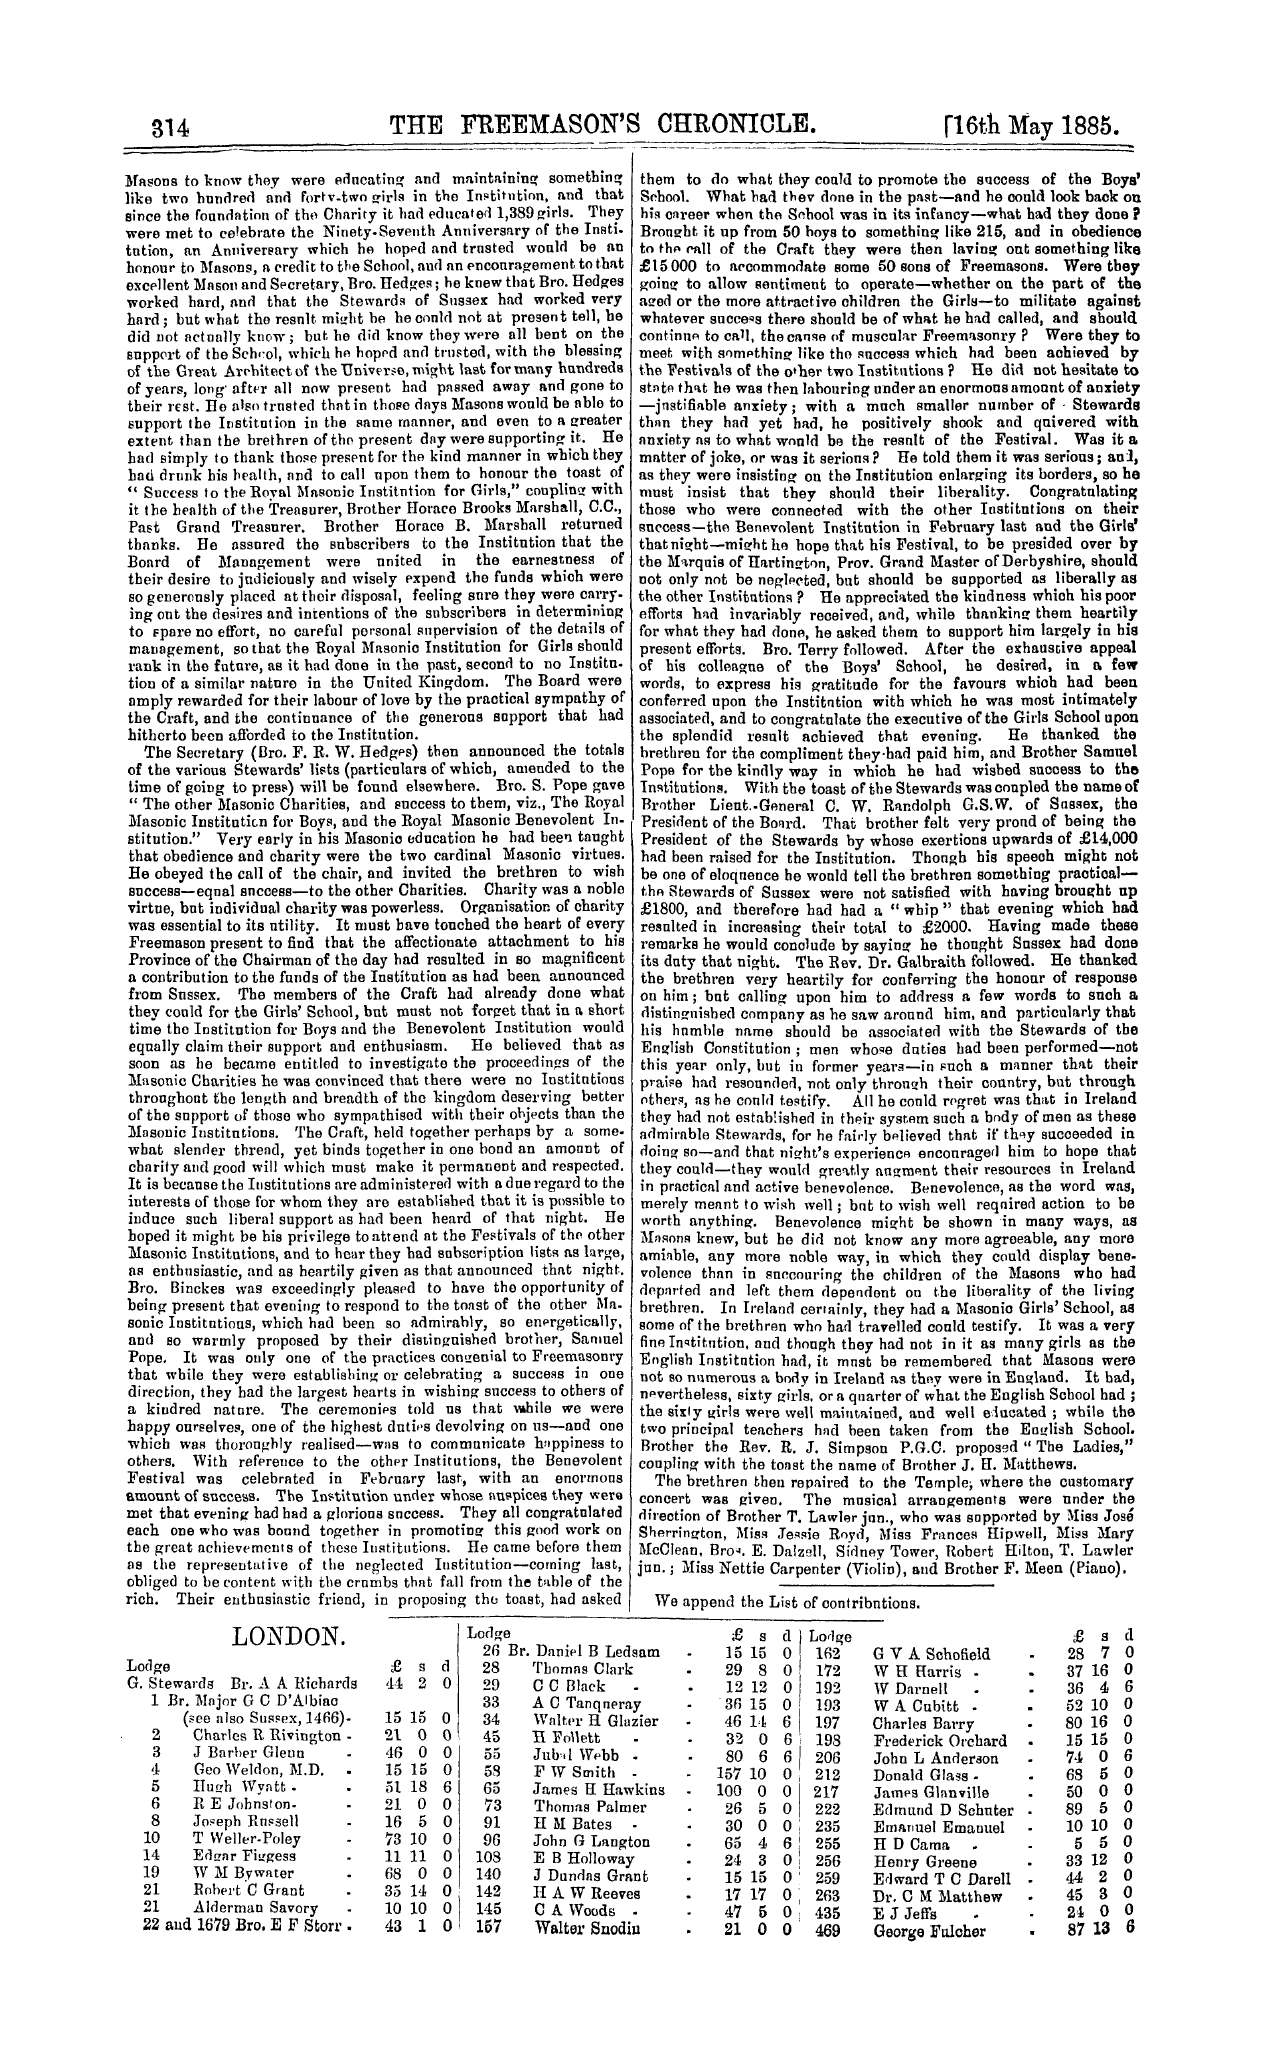 The Freemason's Chronicle: 1885-05-16 - London.